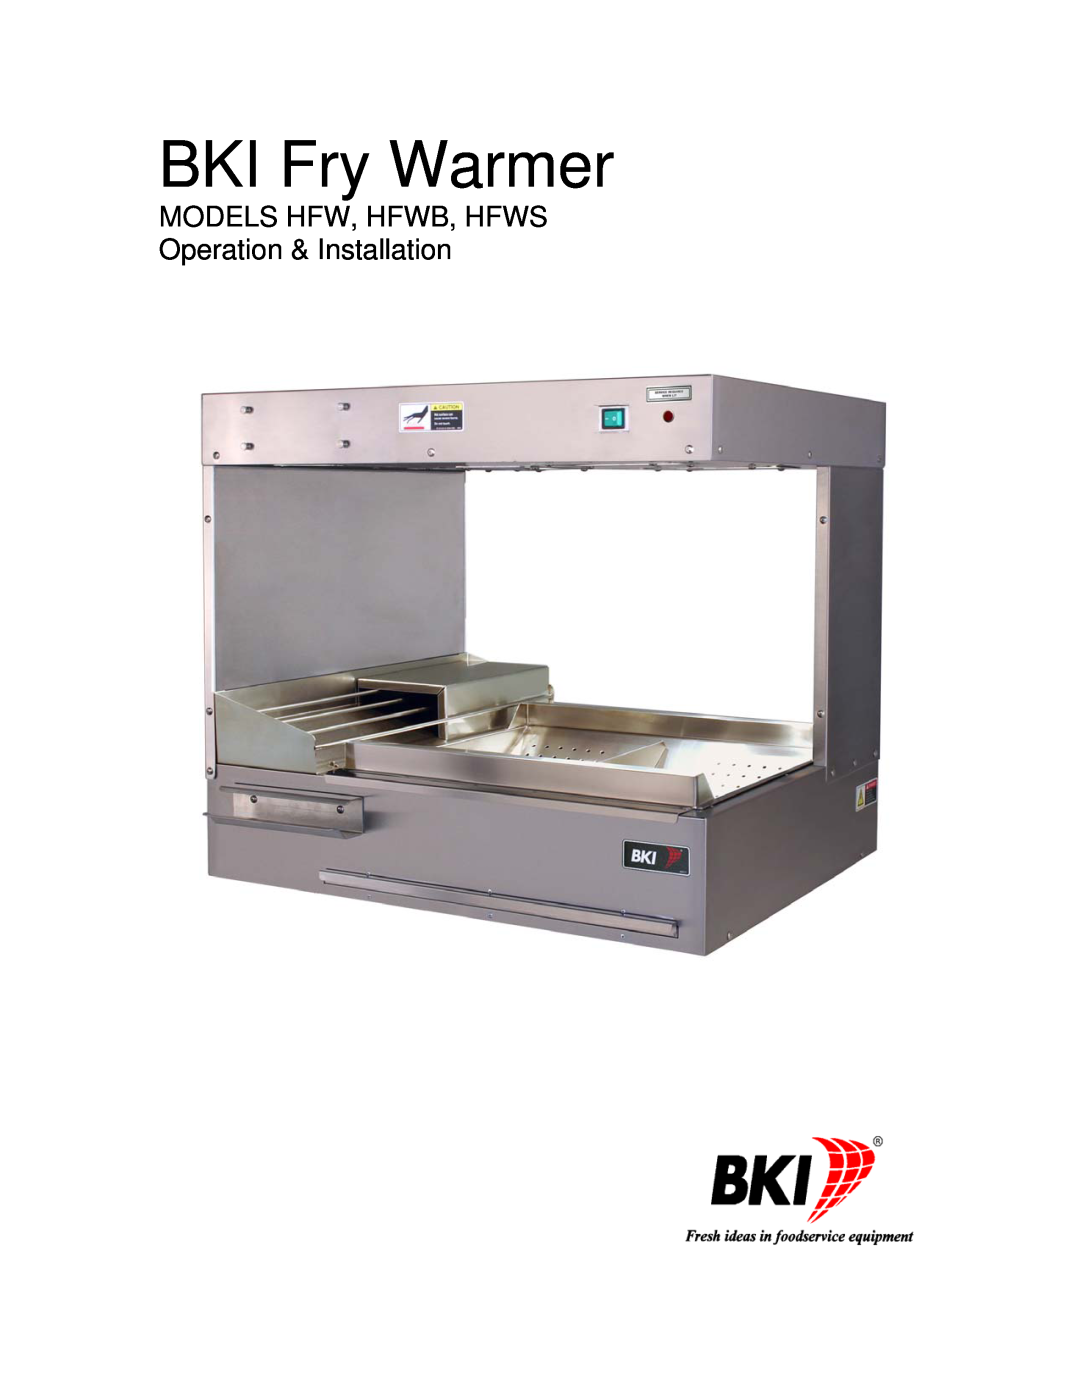 Bakers Pride Oven manual BKI Fry Warmer, MODELS HFW, HFWB, HFWS Operation & Installation 